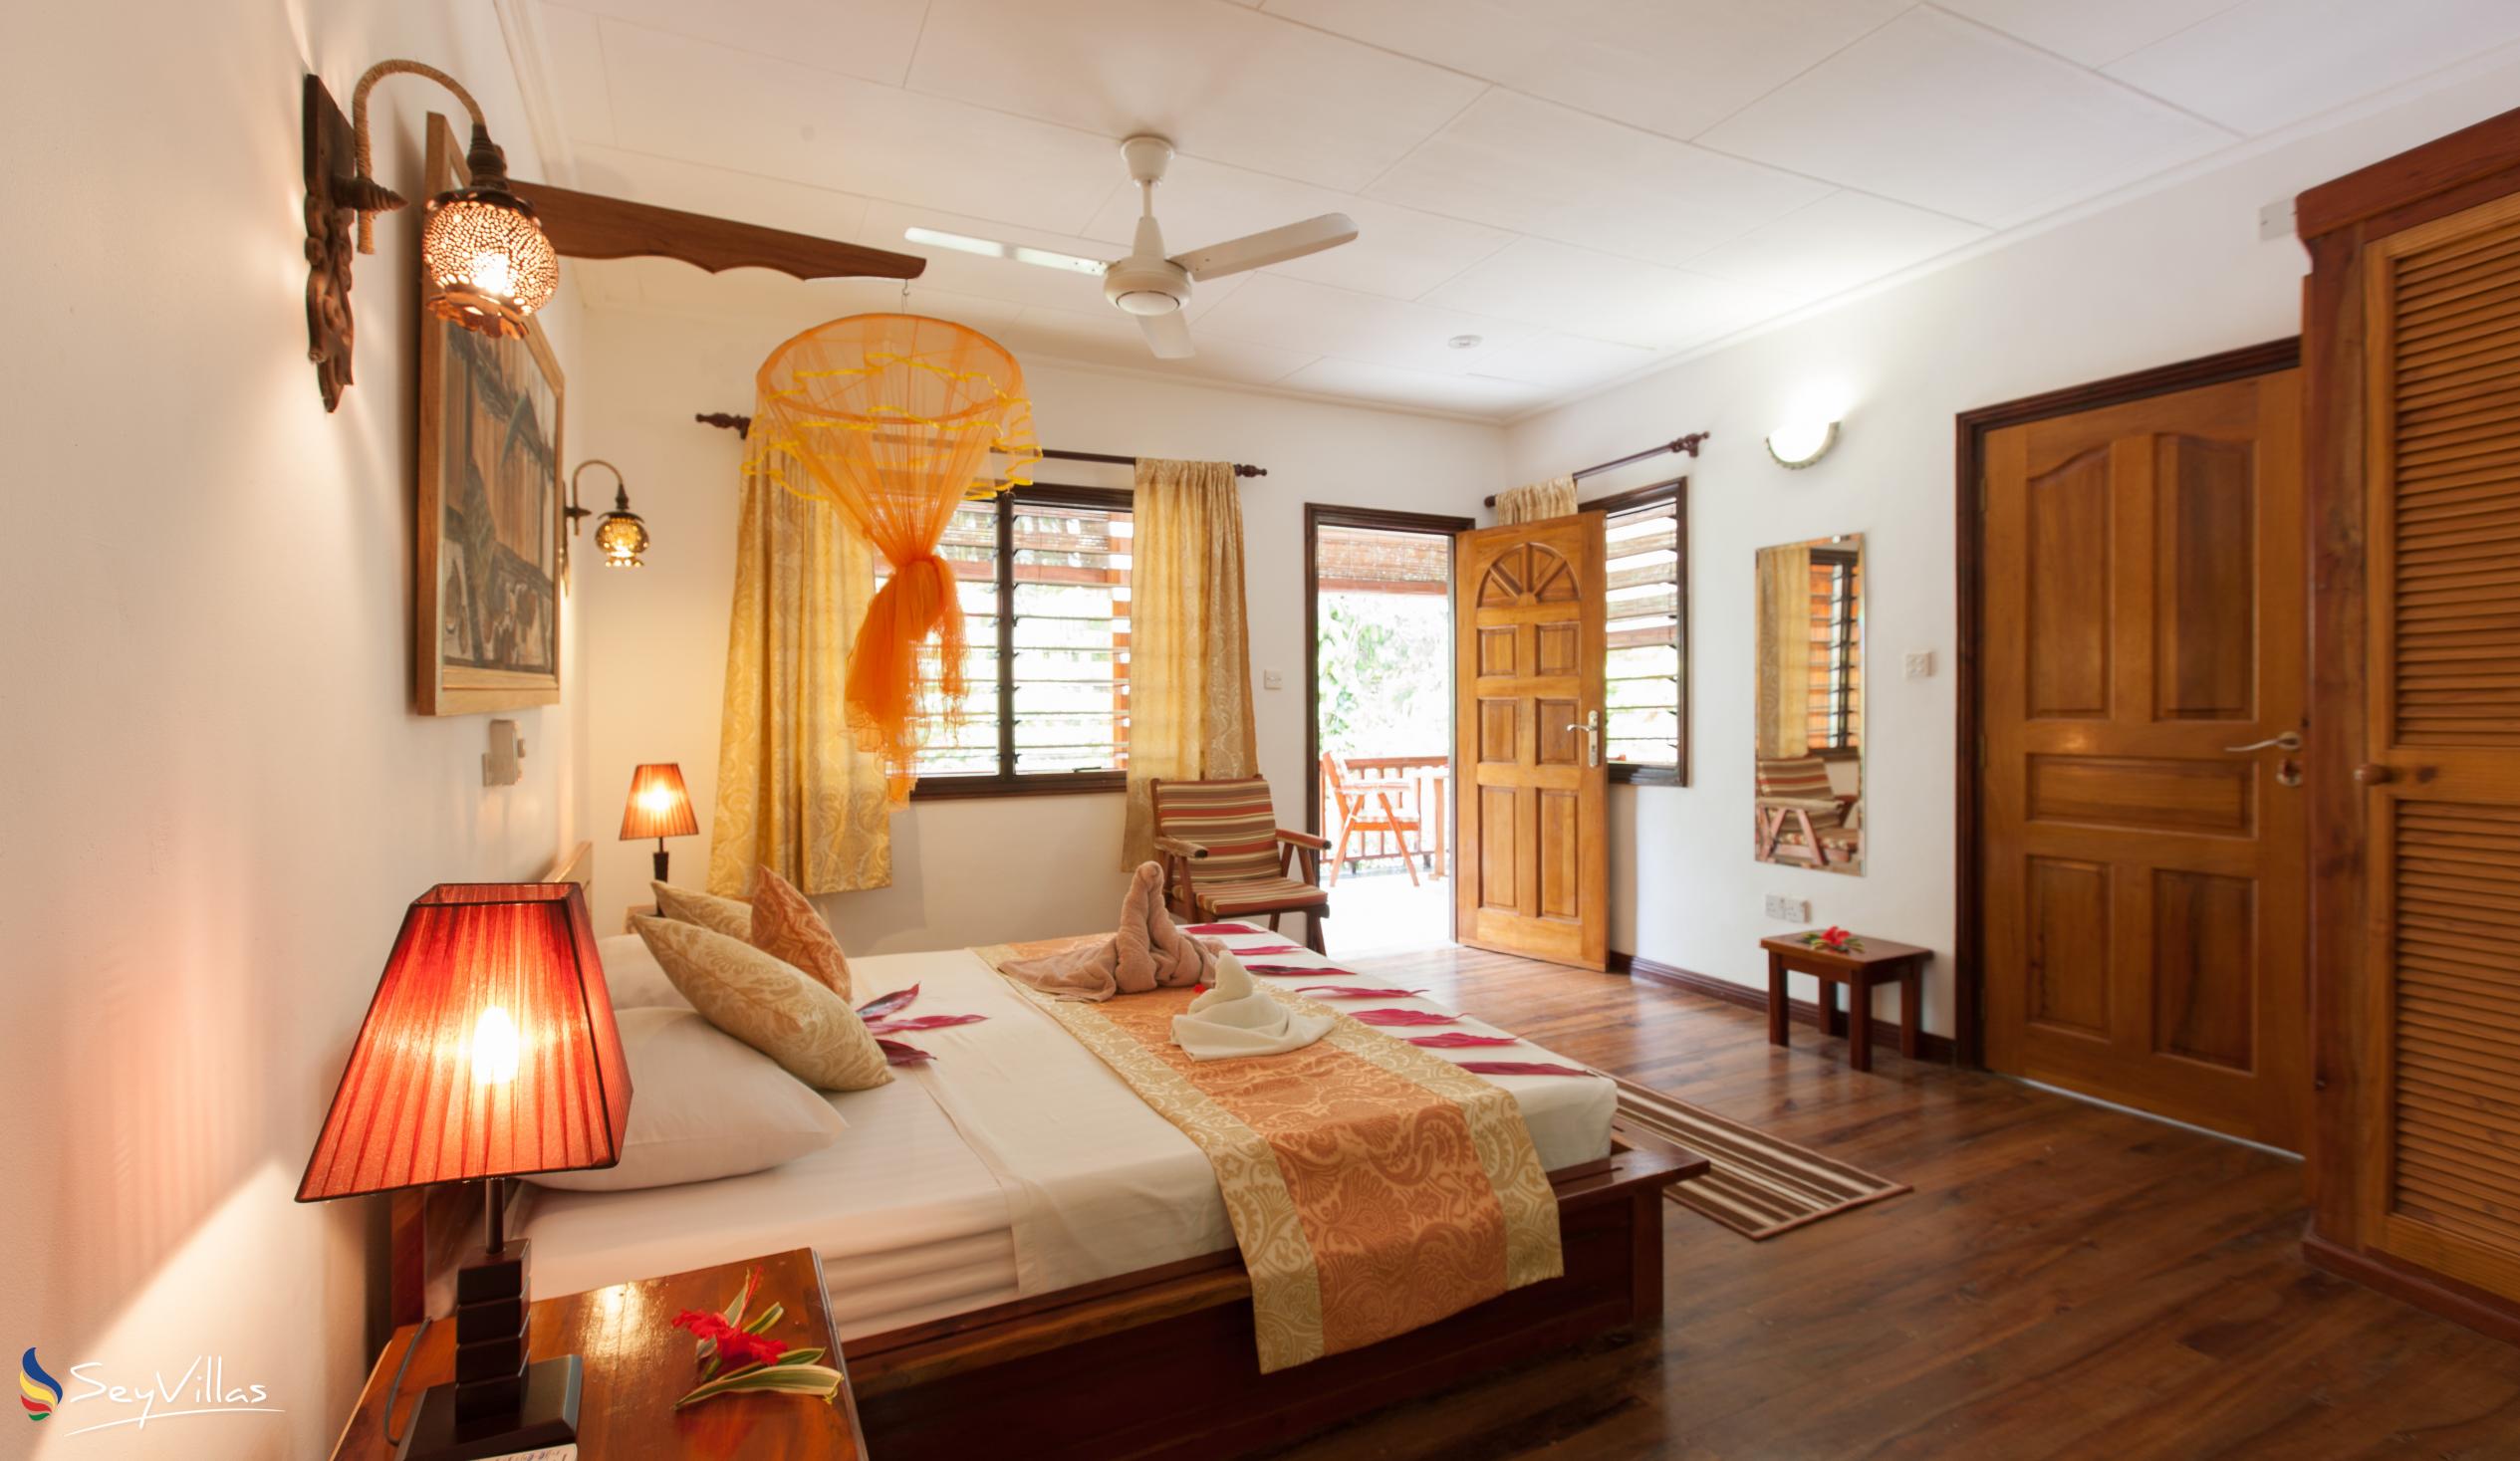 Photo 68: Cocotier Du Rocher Self Catering Apartments - Superior Room Kafoul Koko - La Digue (Seychelles)